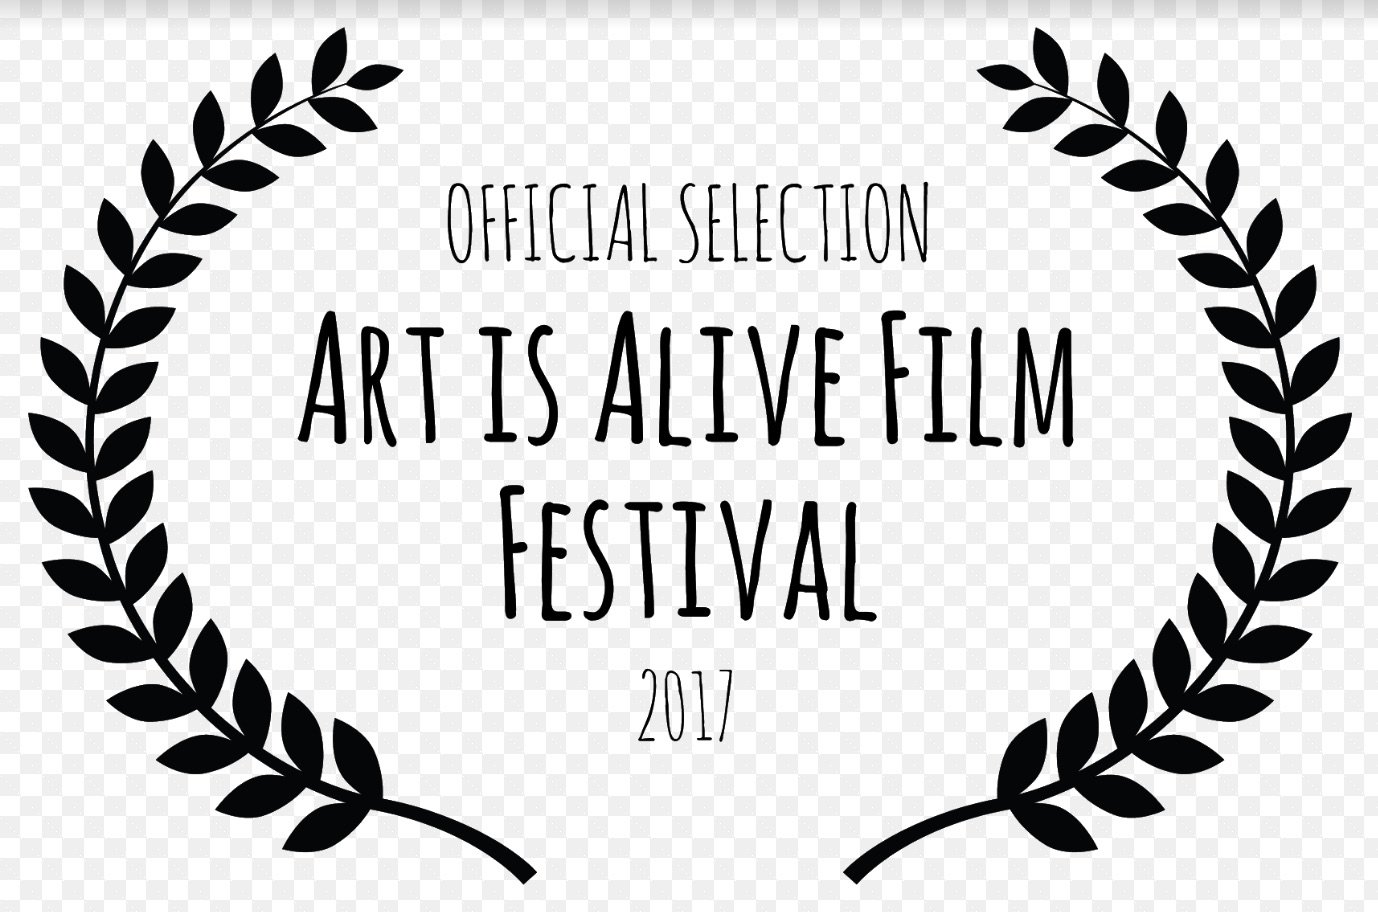 art-is-alive-film-festival-official-selection.jpg